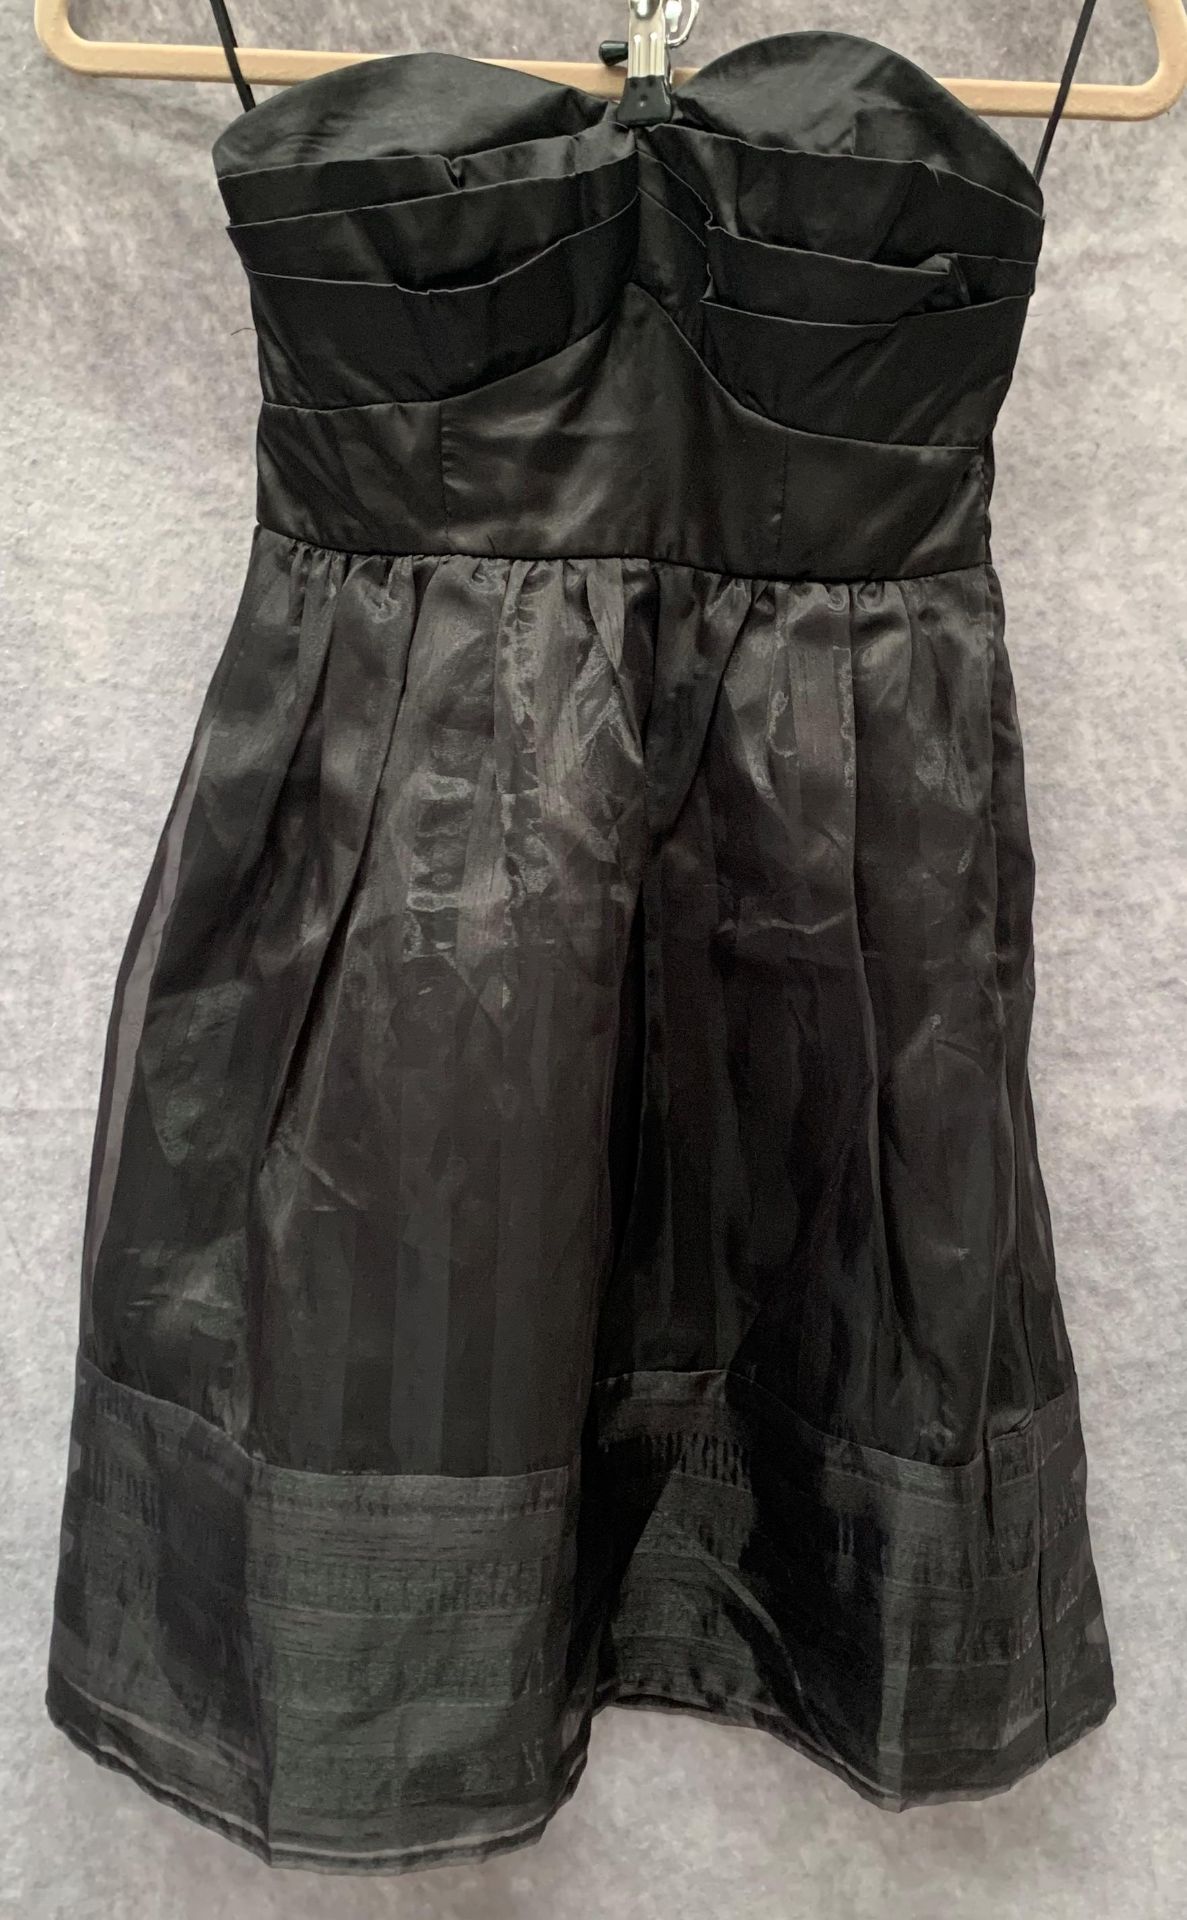 A Vera Moda ladies short dress, black, size 8,